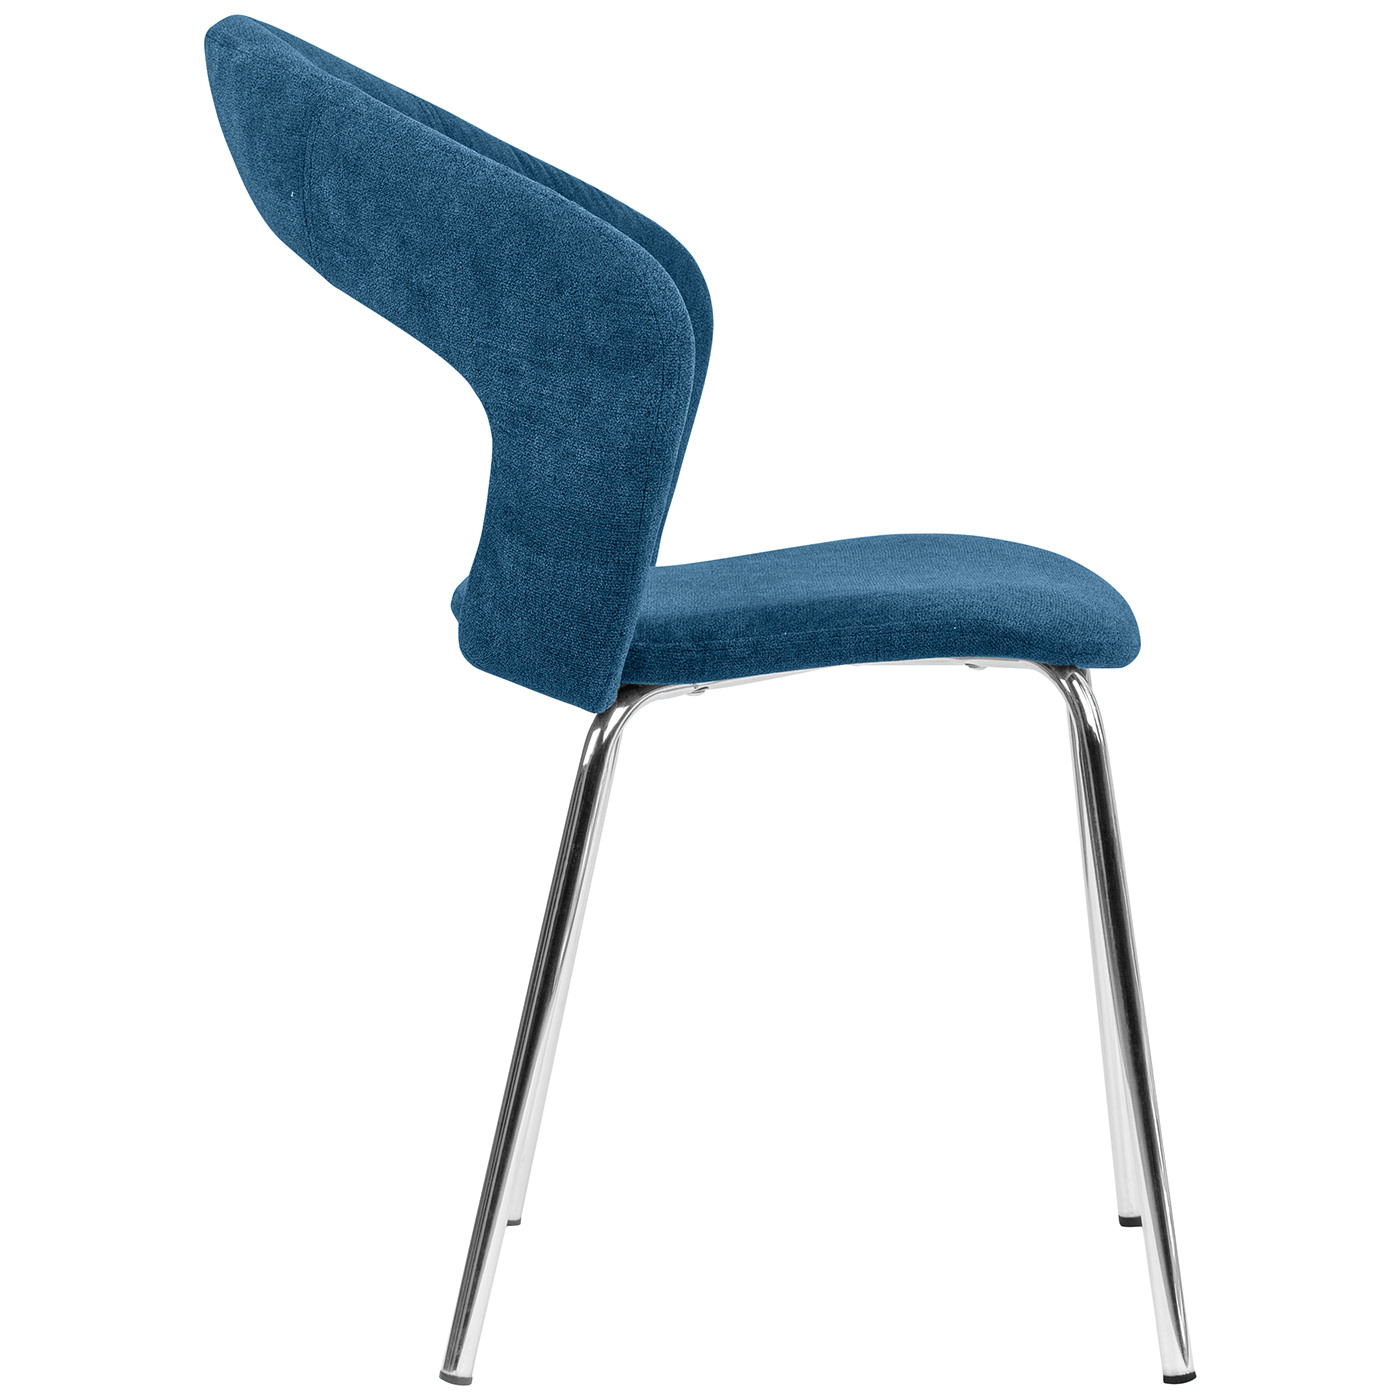 HI 1739 180 12 – Edna Dining Chair Blue Chrome Base (3)